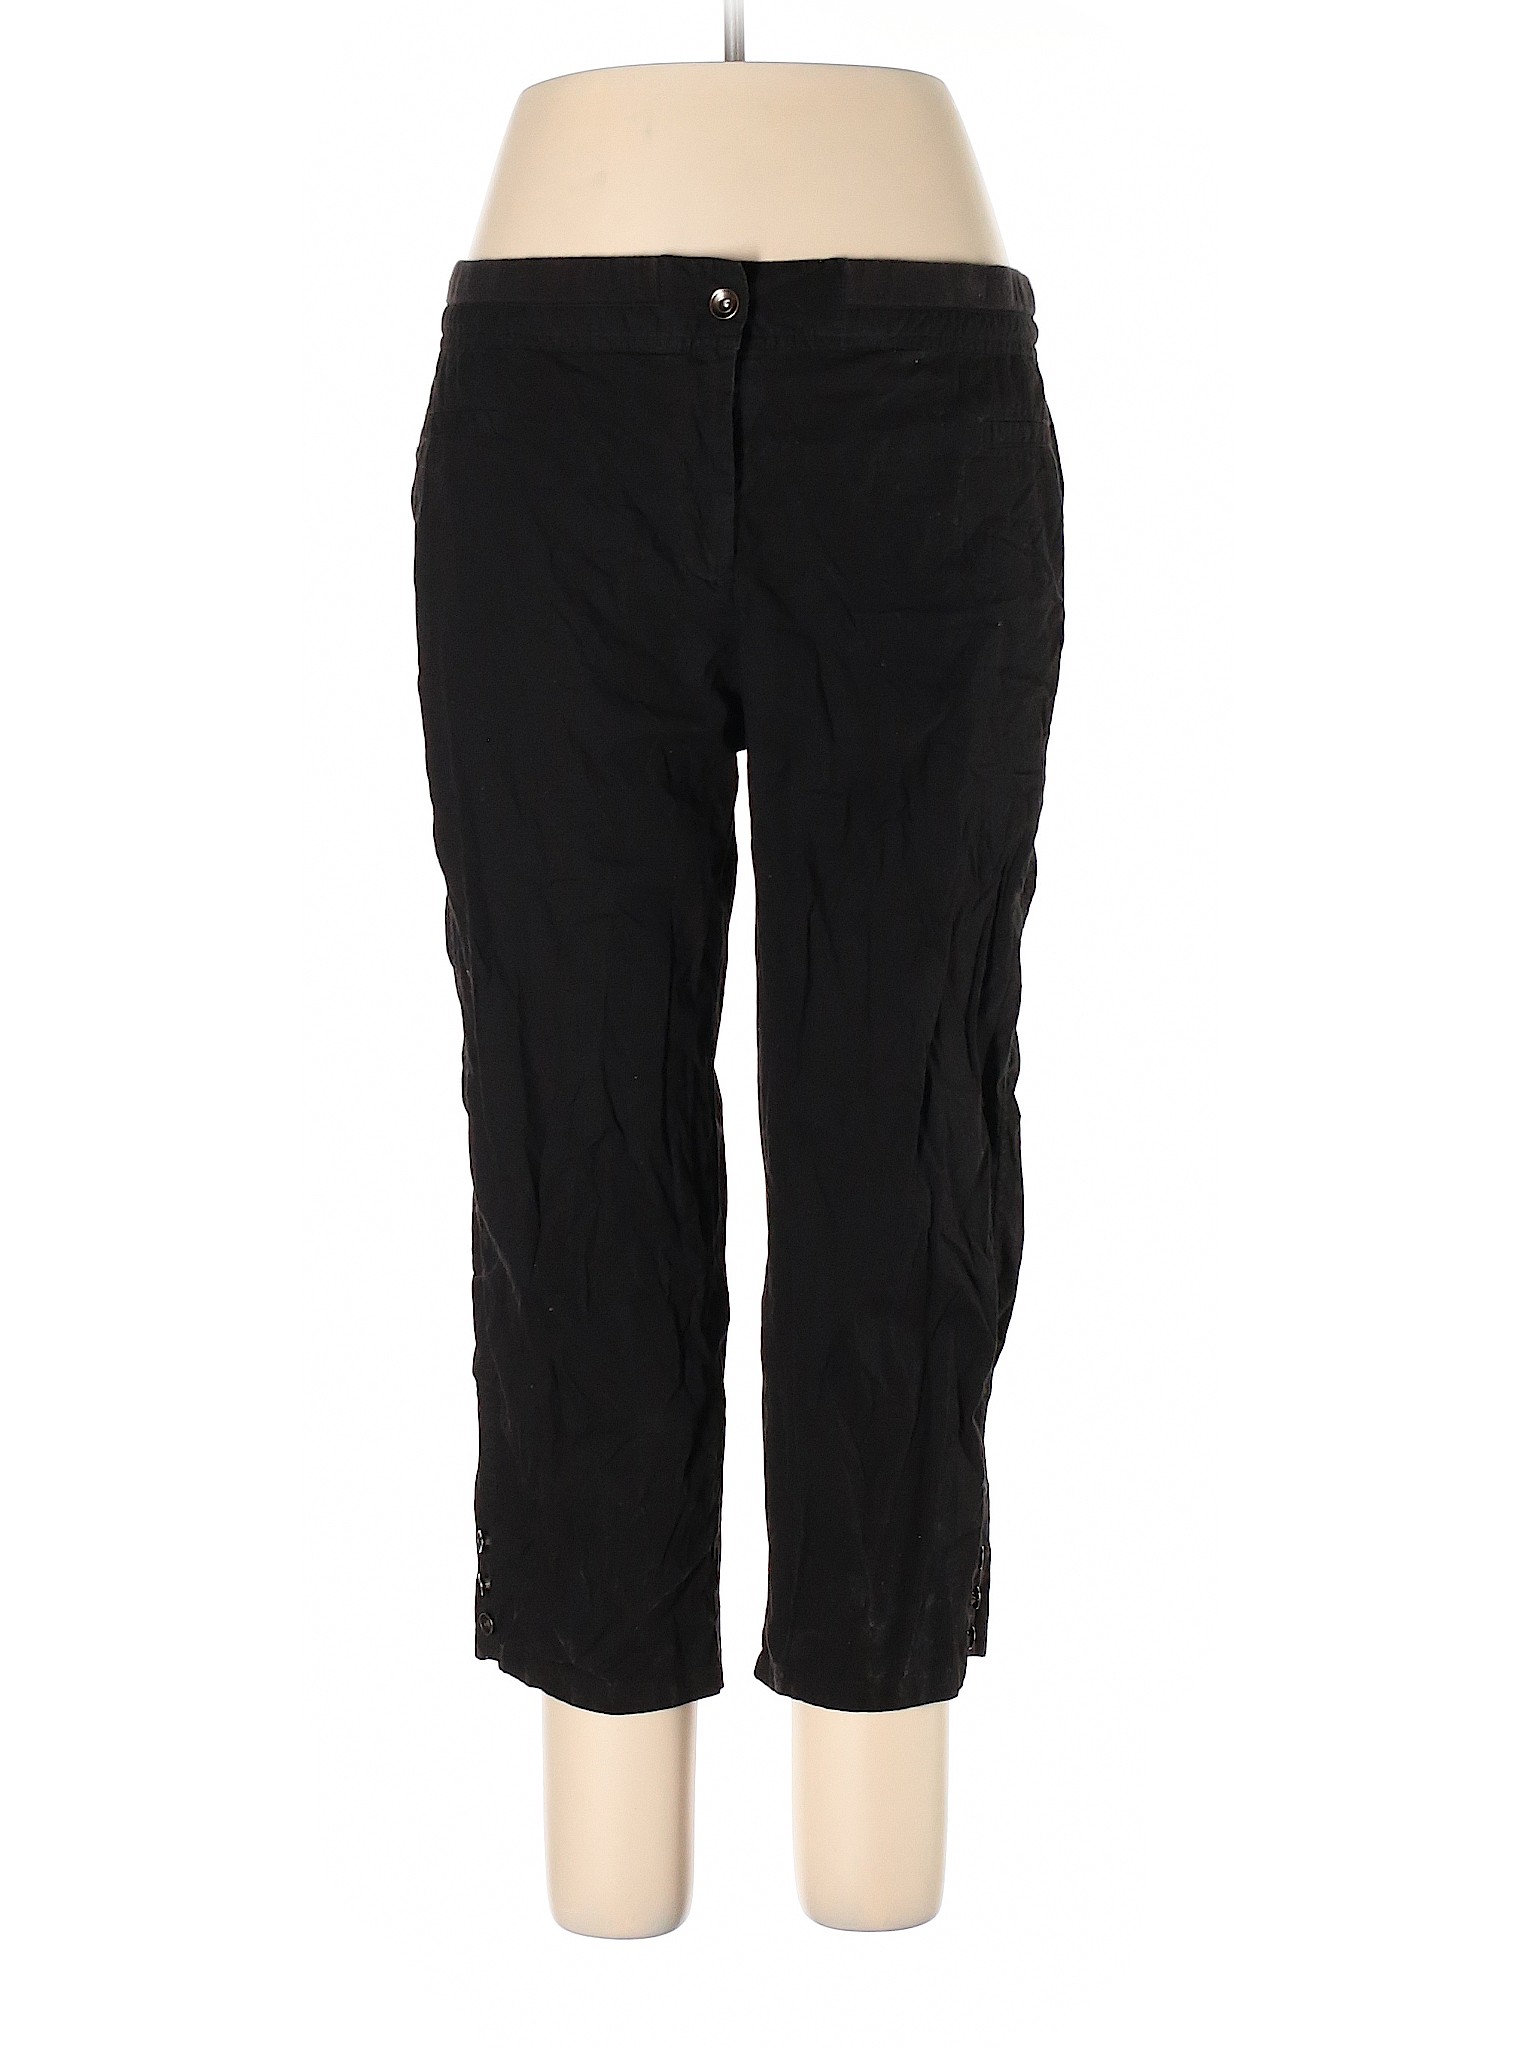 Rafaella Women Black Casual Pants 16 | eBay